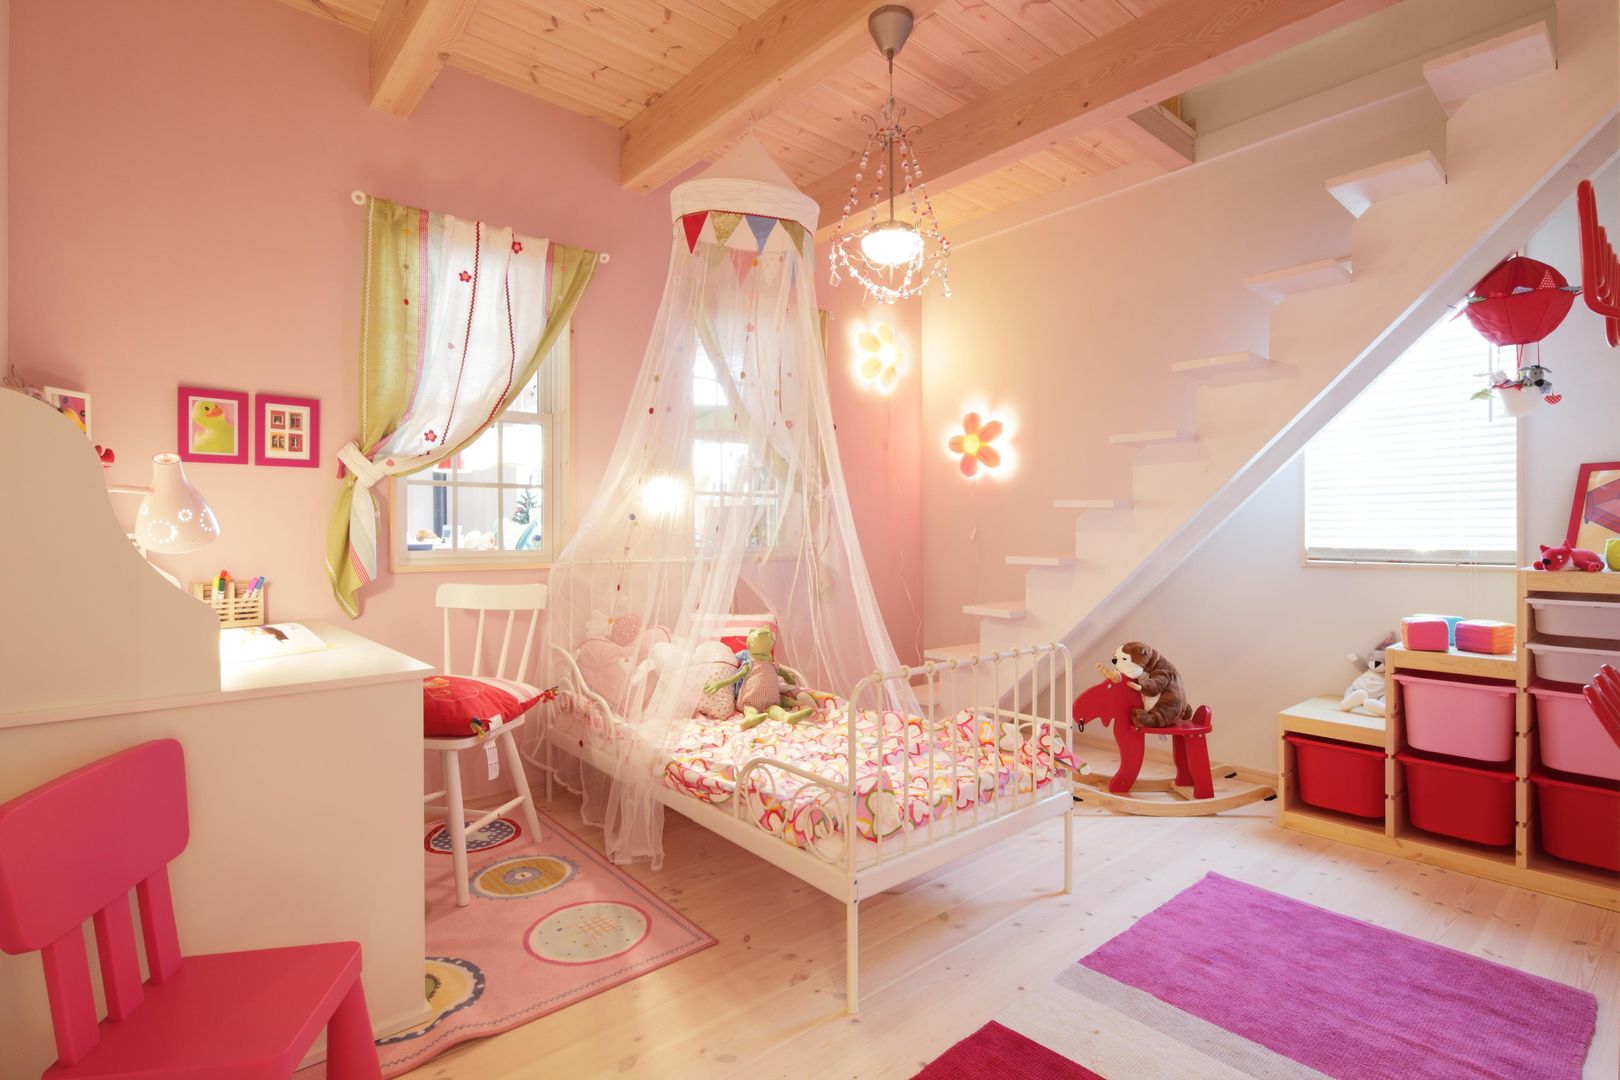 D`s HOUSE, dwarf dwarf 北欧デザインの 子供部屋